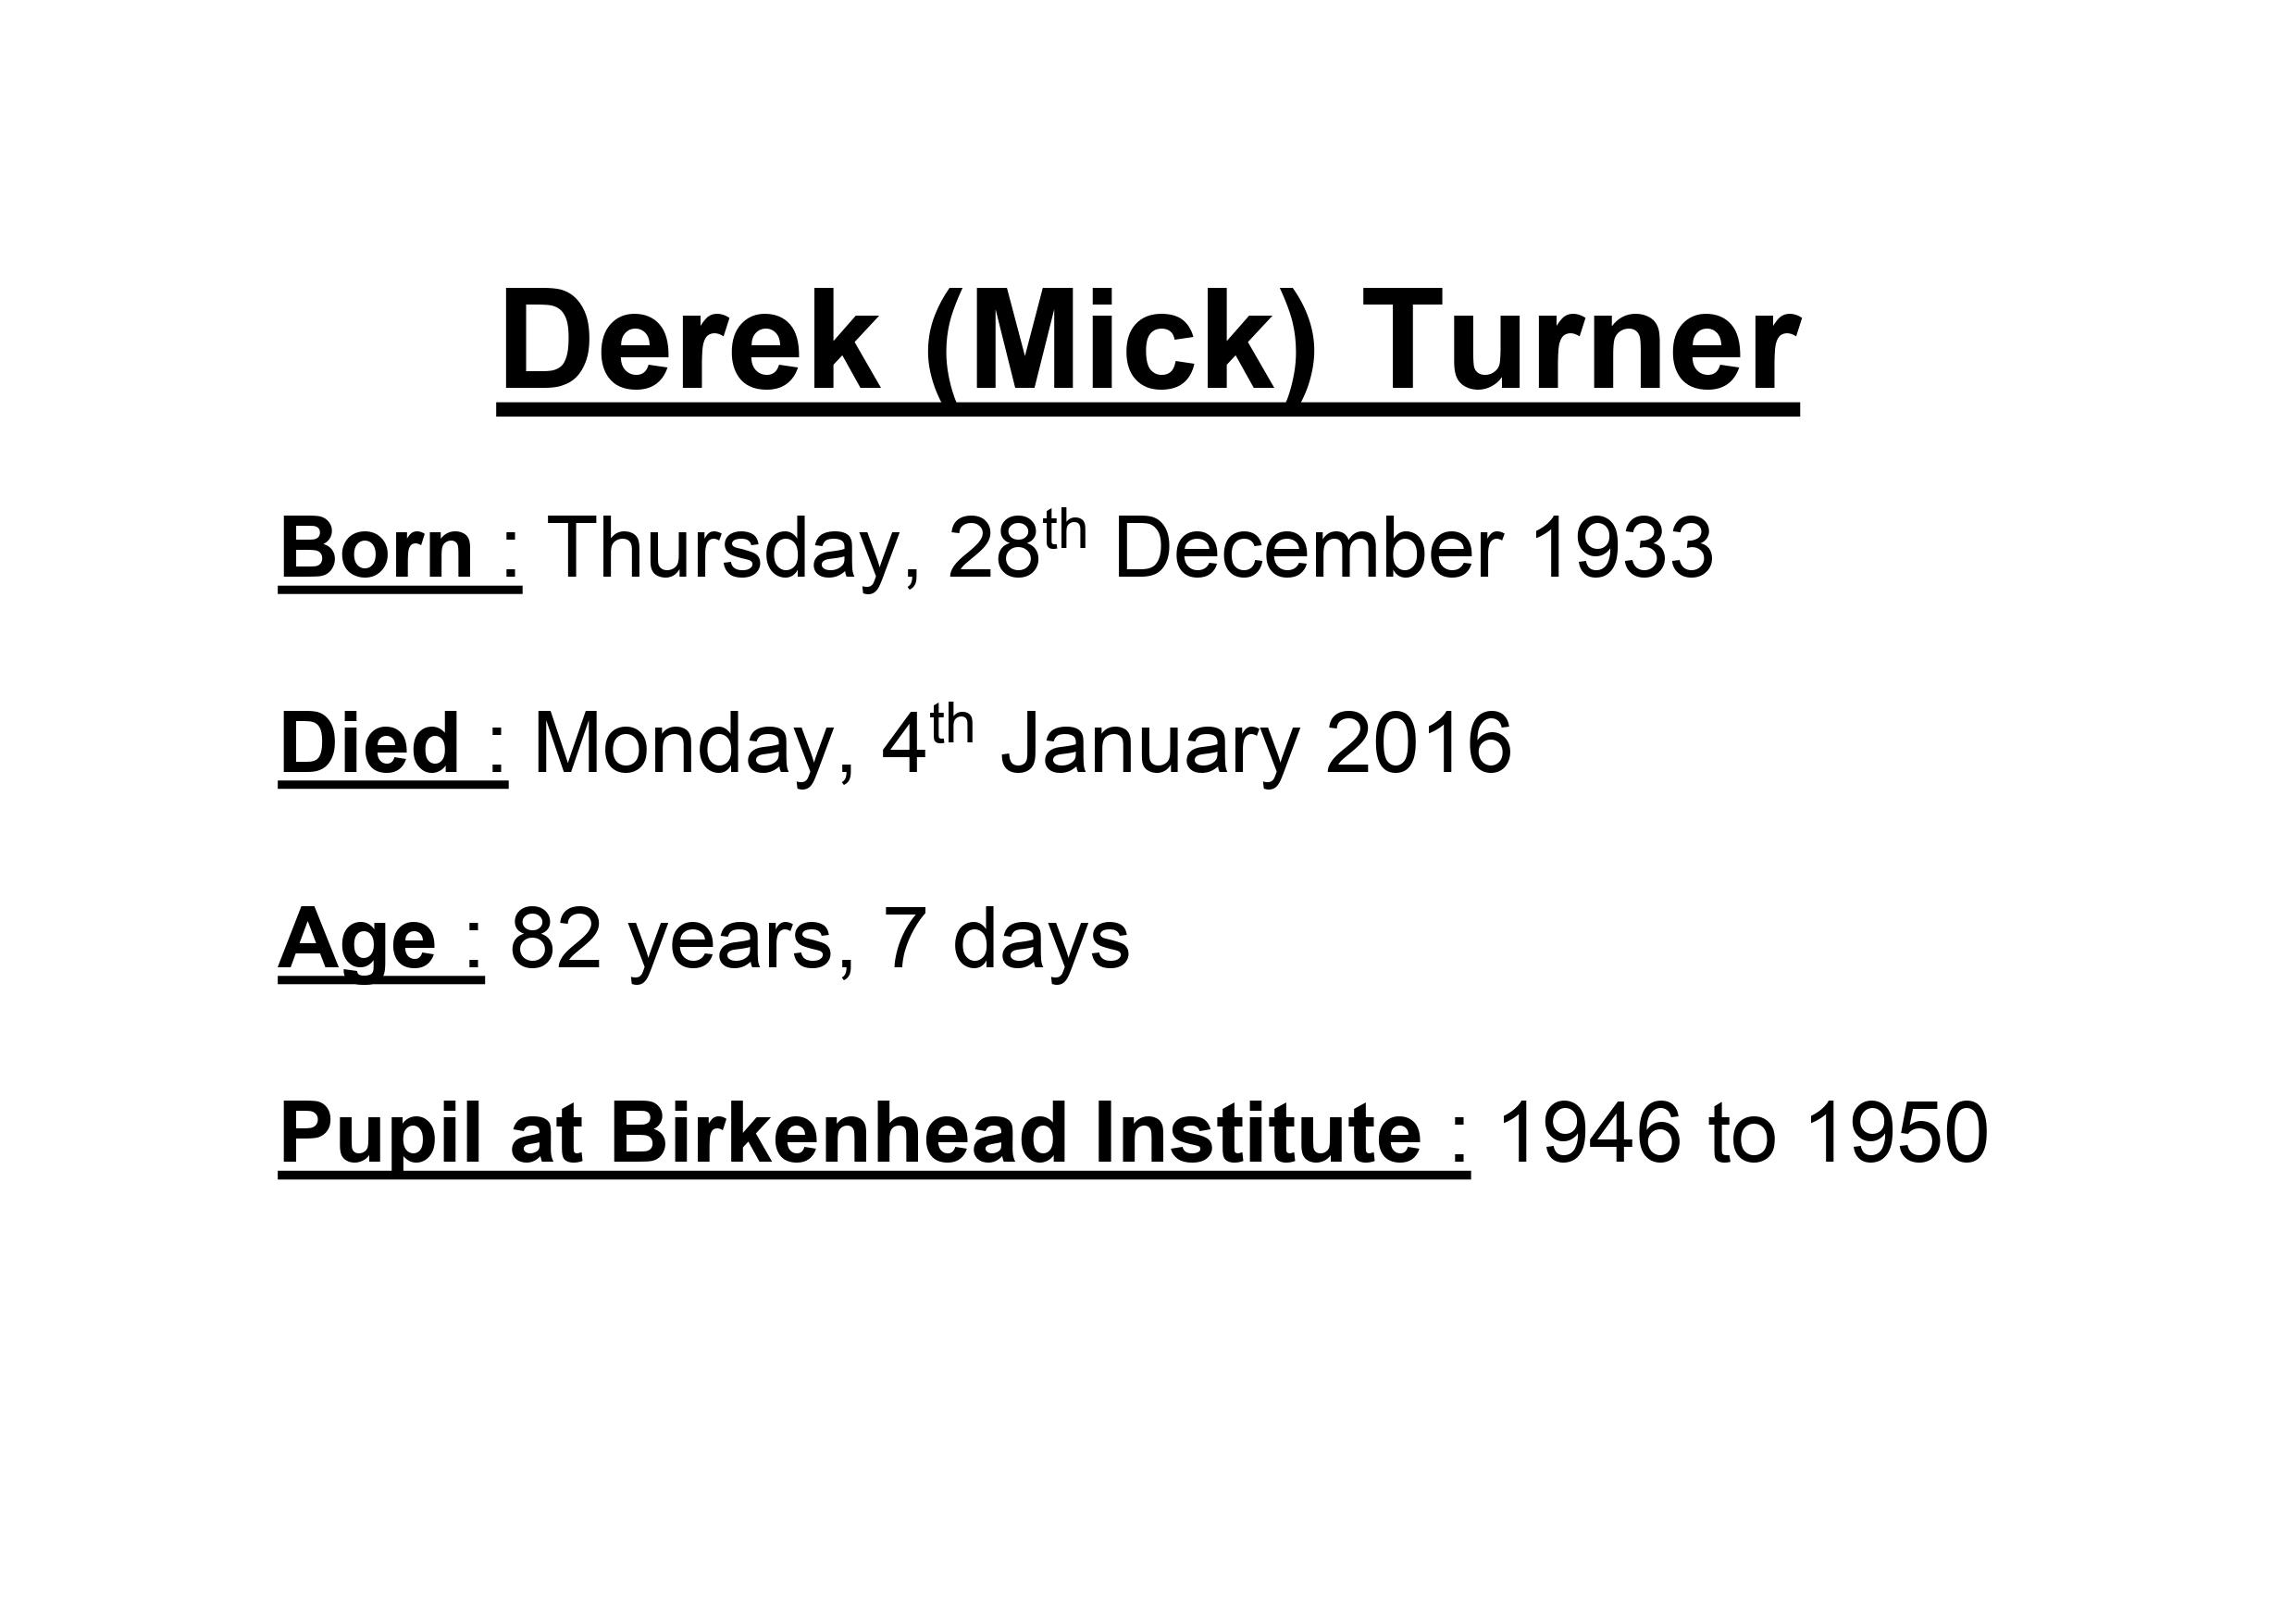 Mick Turner